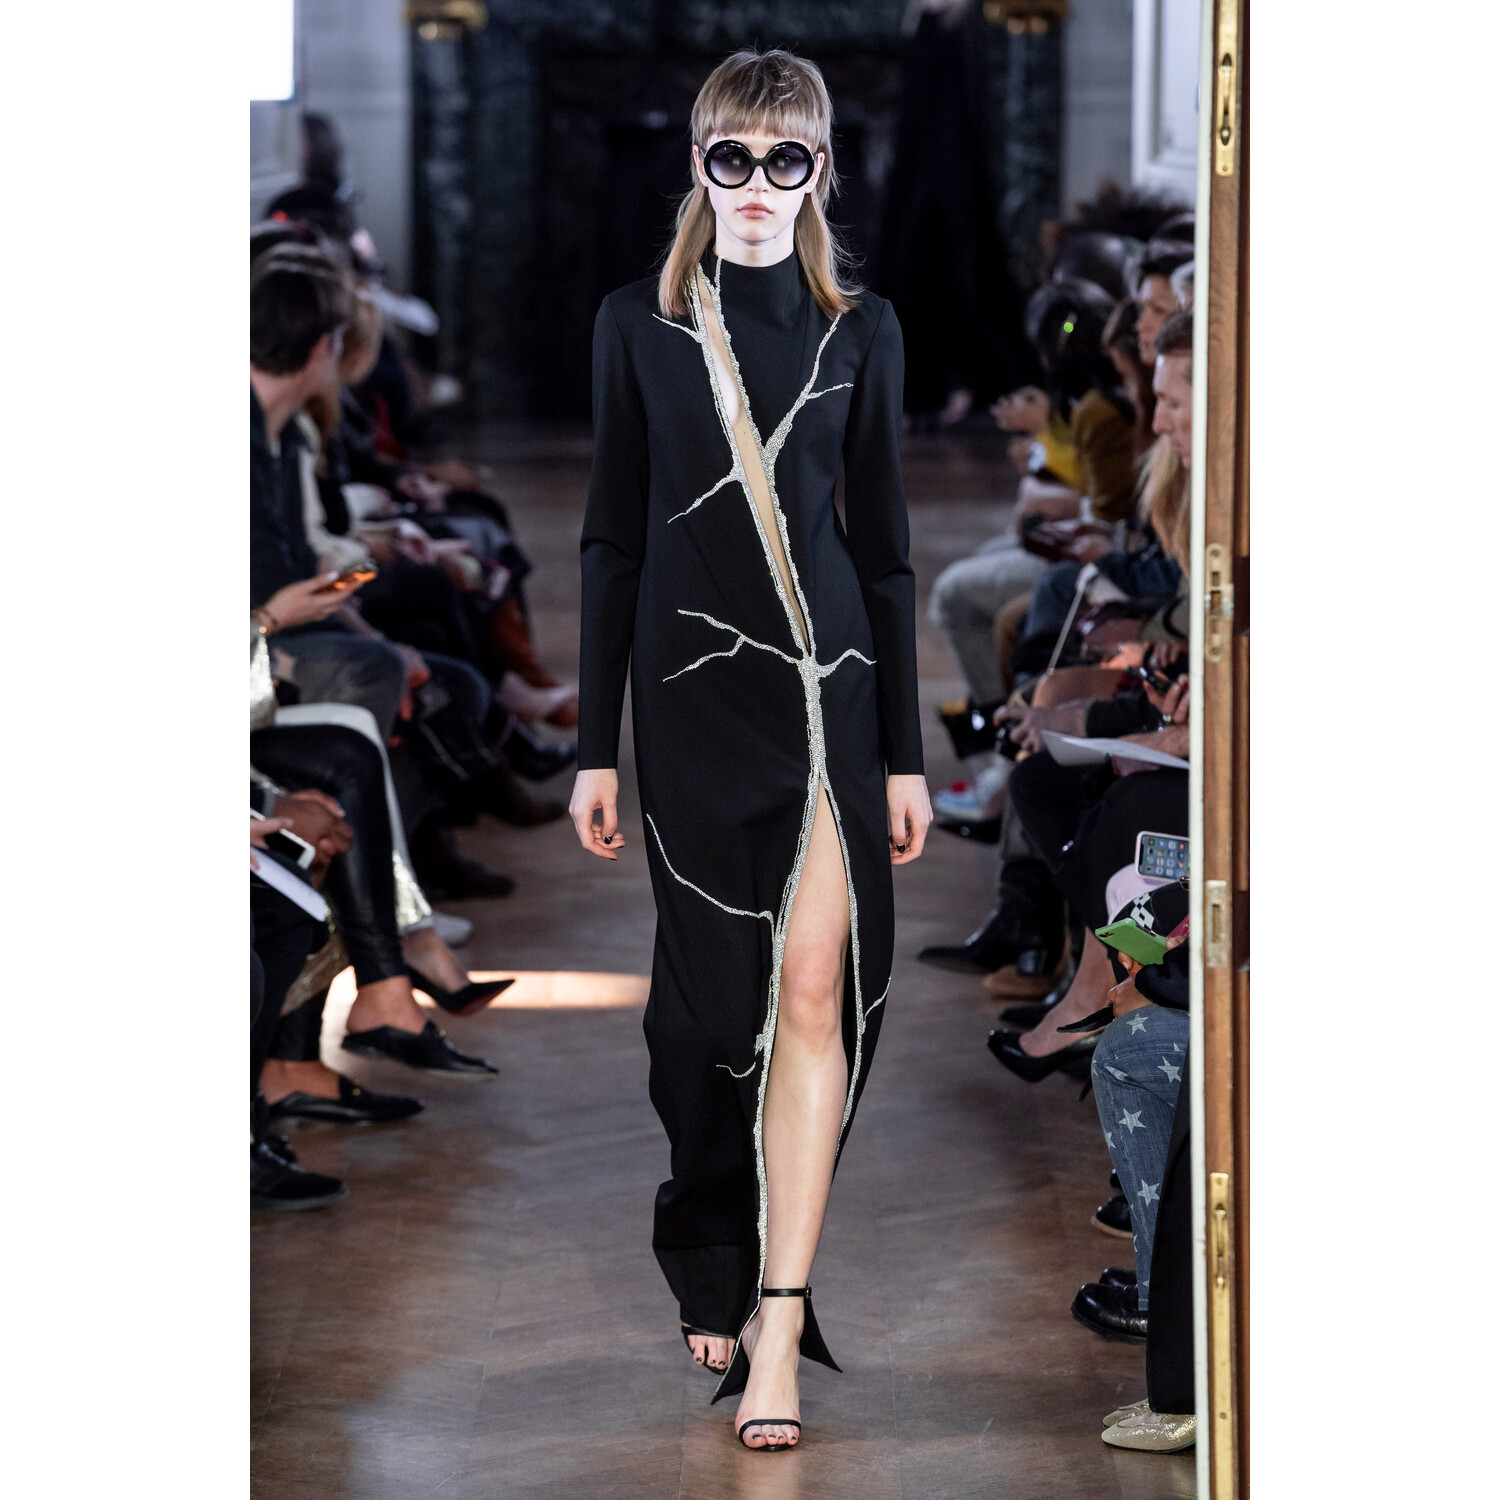 Фото Guy Laroche Fall 2019 Ready-to-Wear / Guy Laroche осень 2019 / Неделя моды: Париж